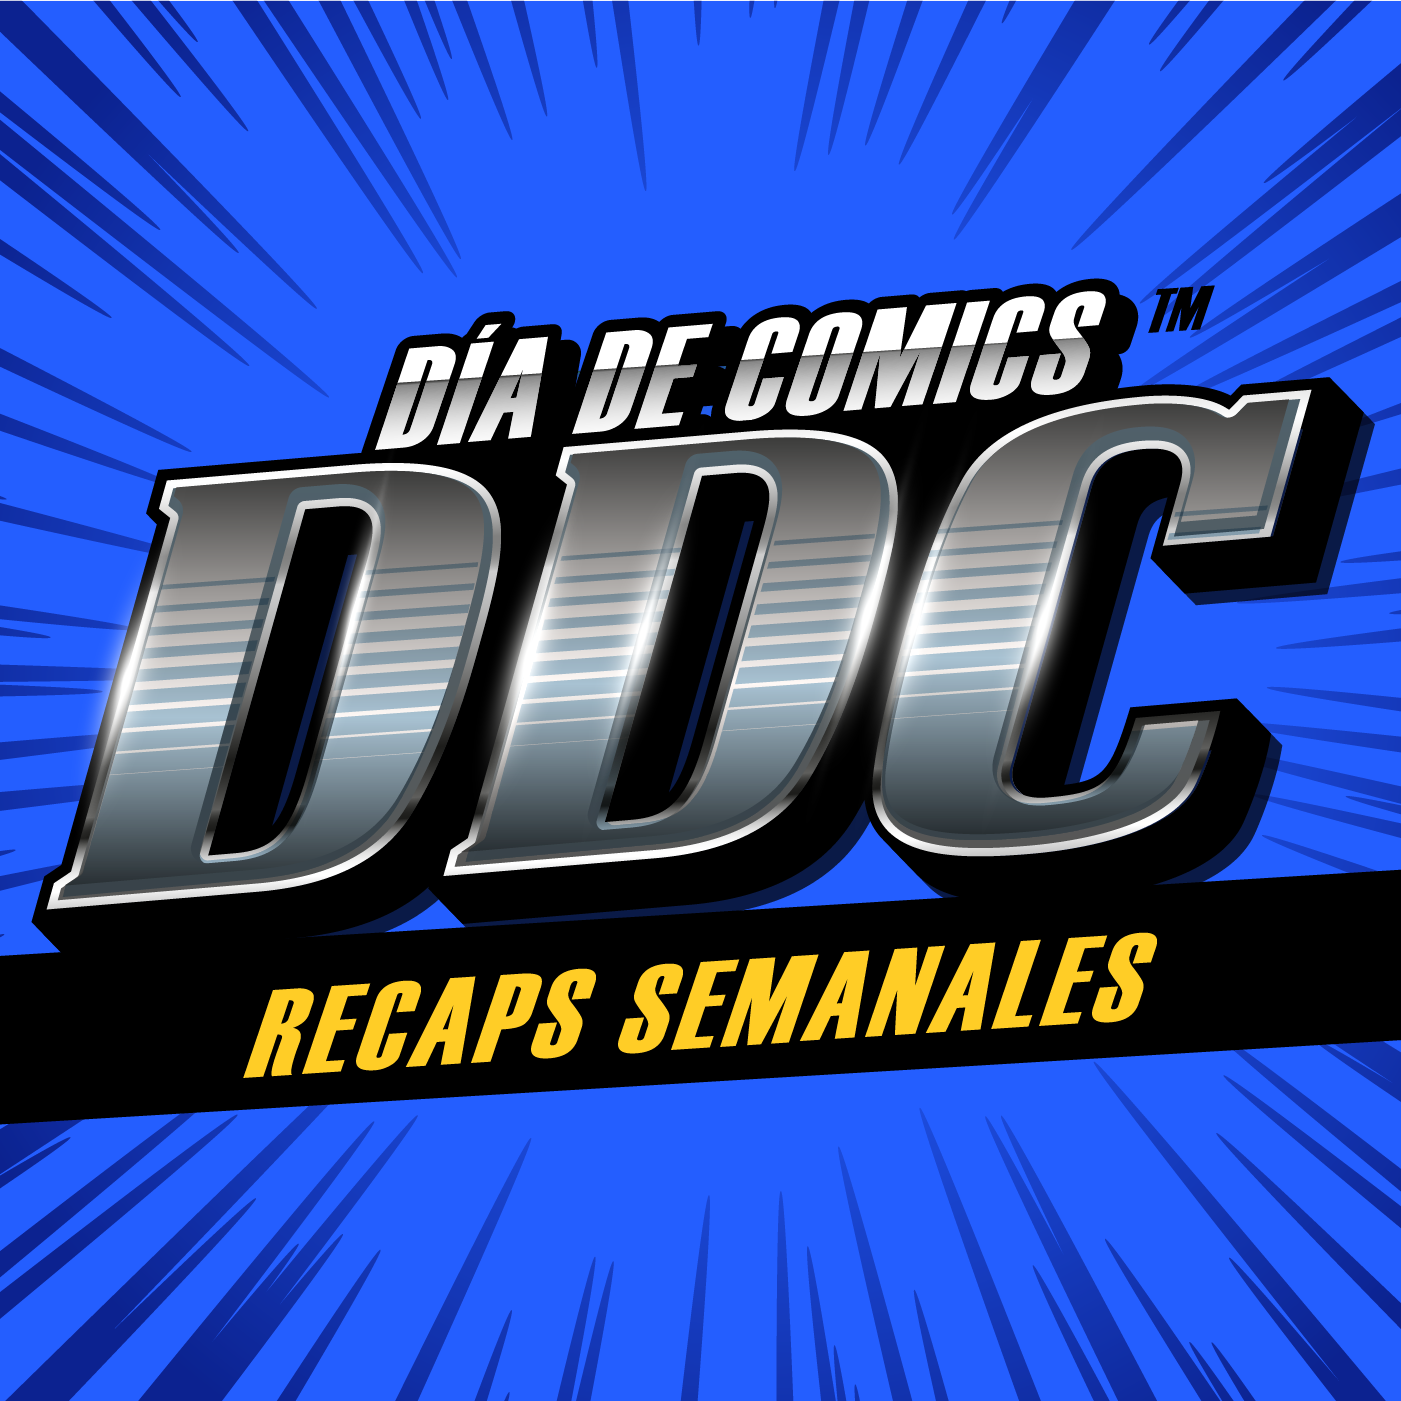 DDC T7E12 - Trunks vs Un villano de Power Rangers